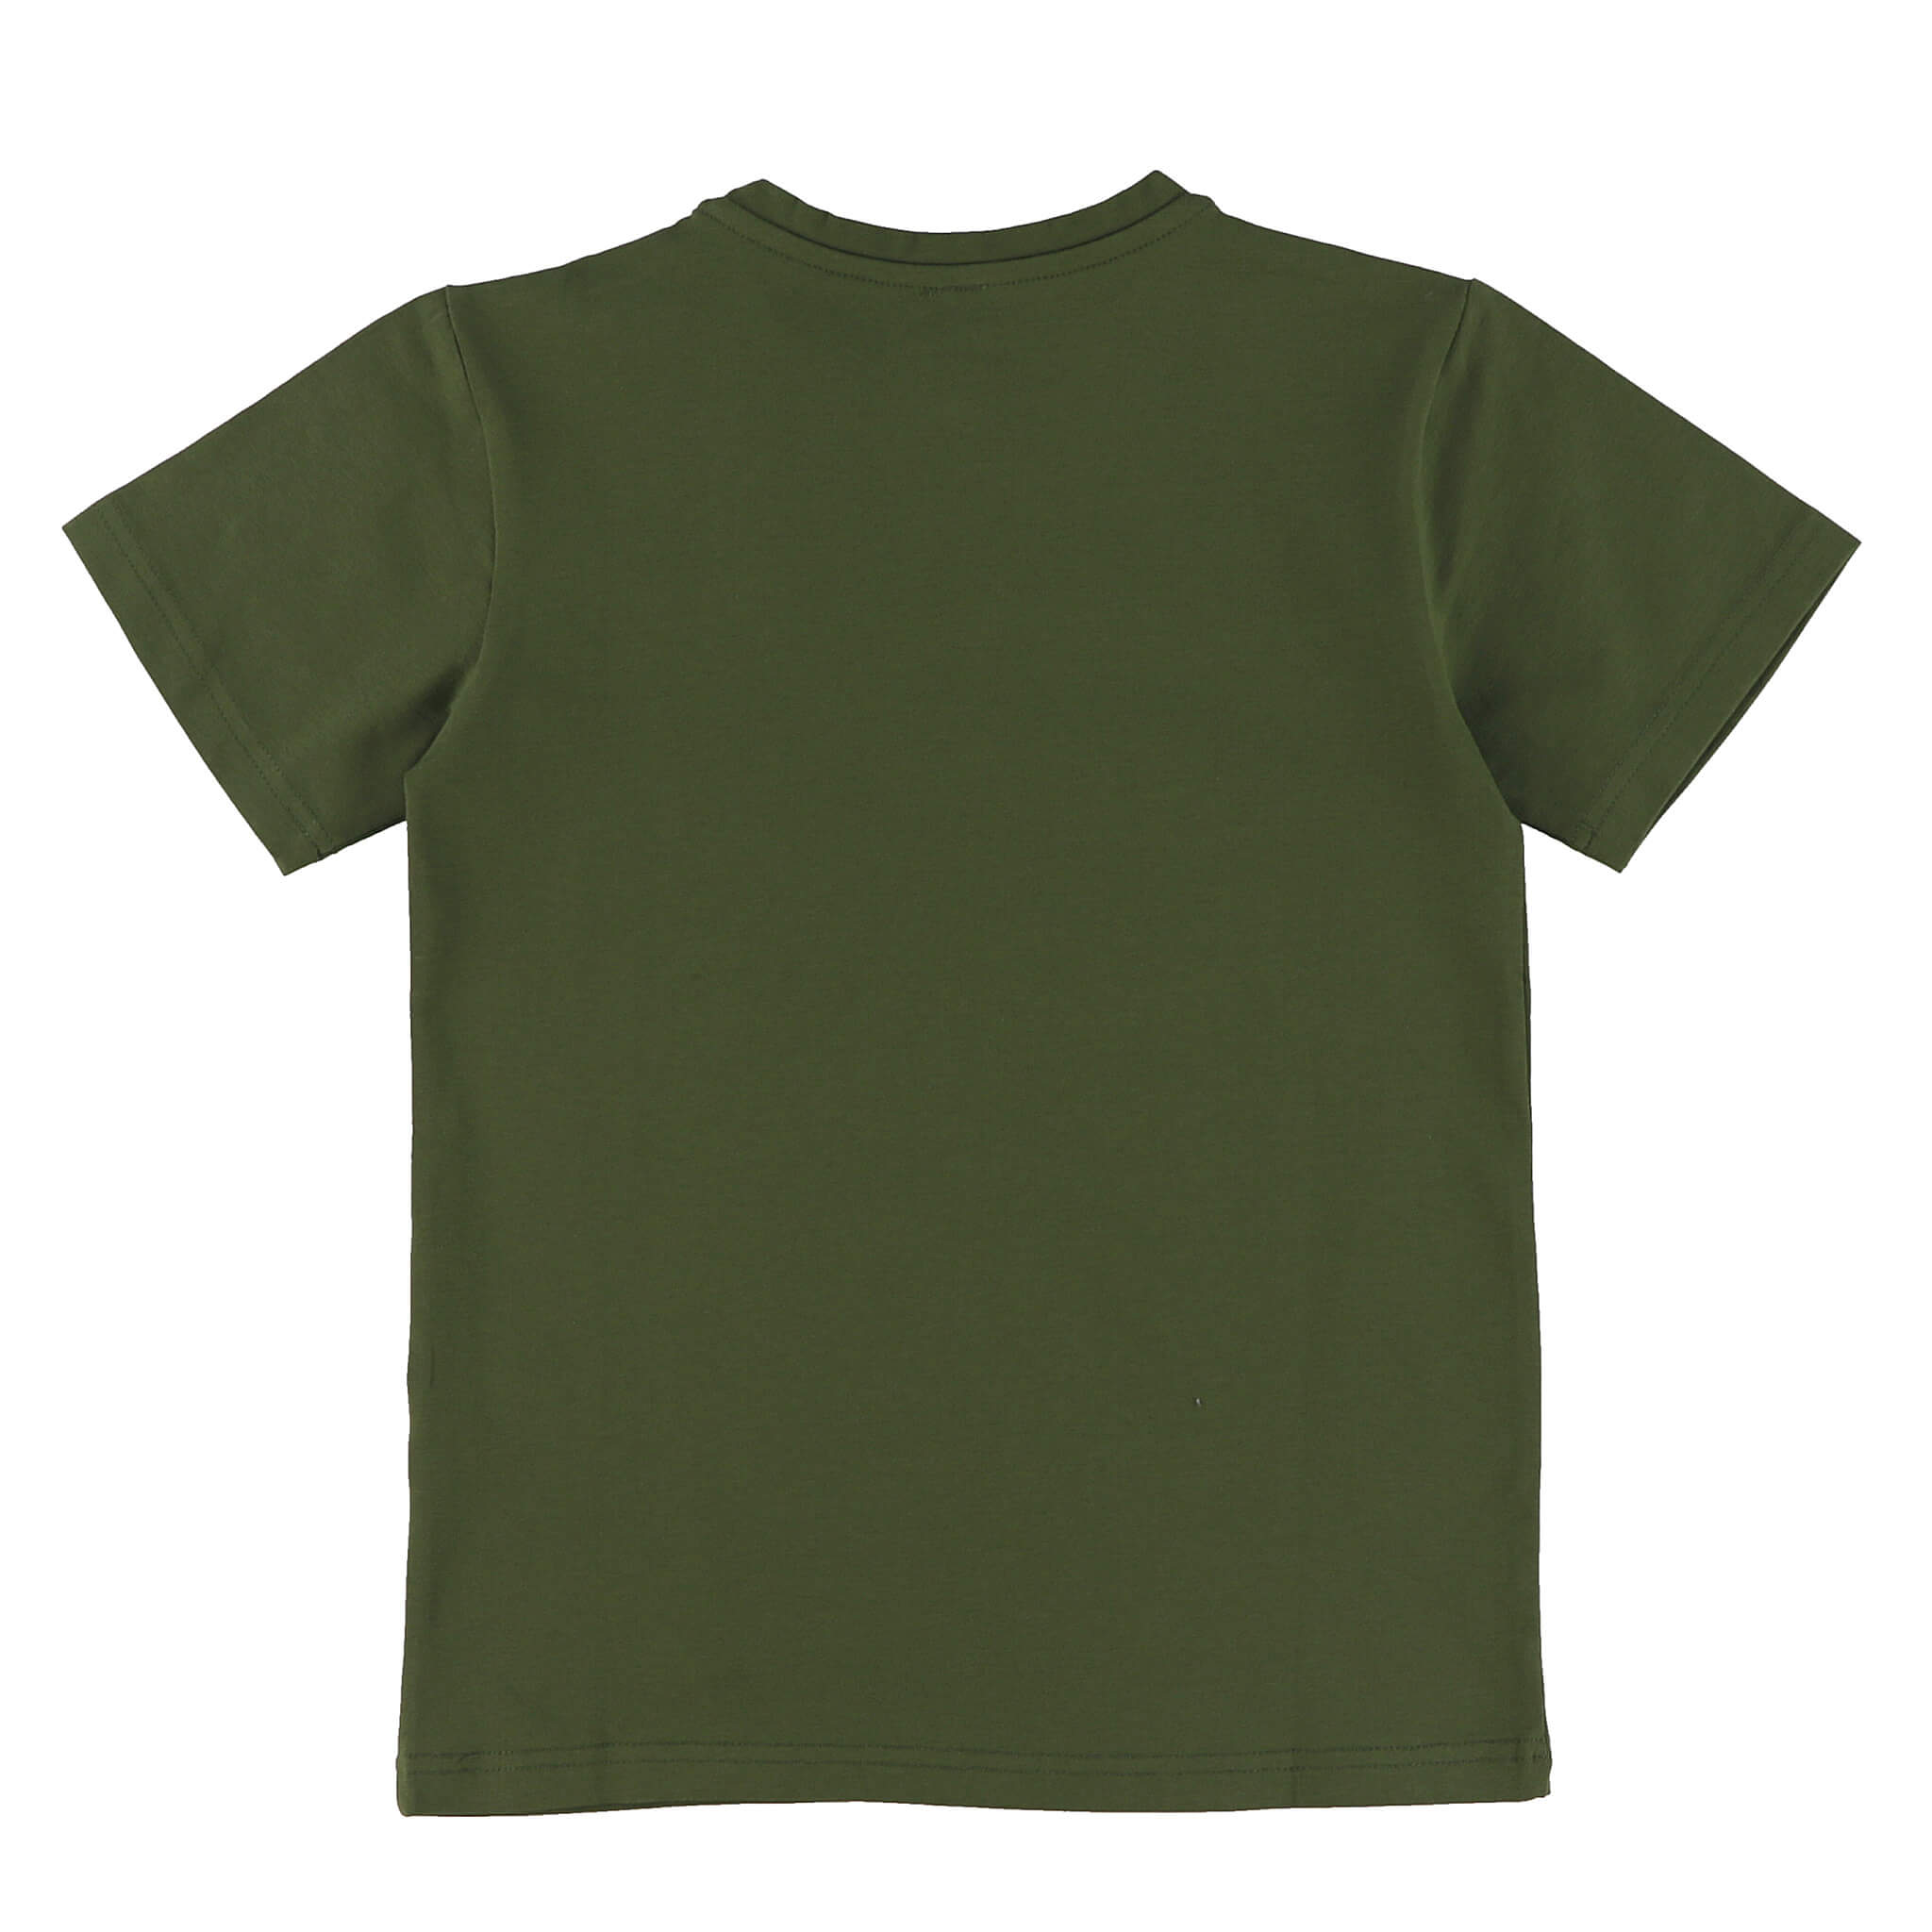 K's Nature T-Shirt - Hooké